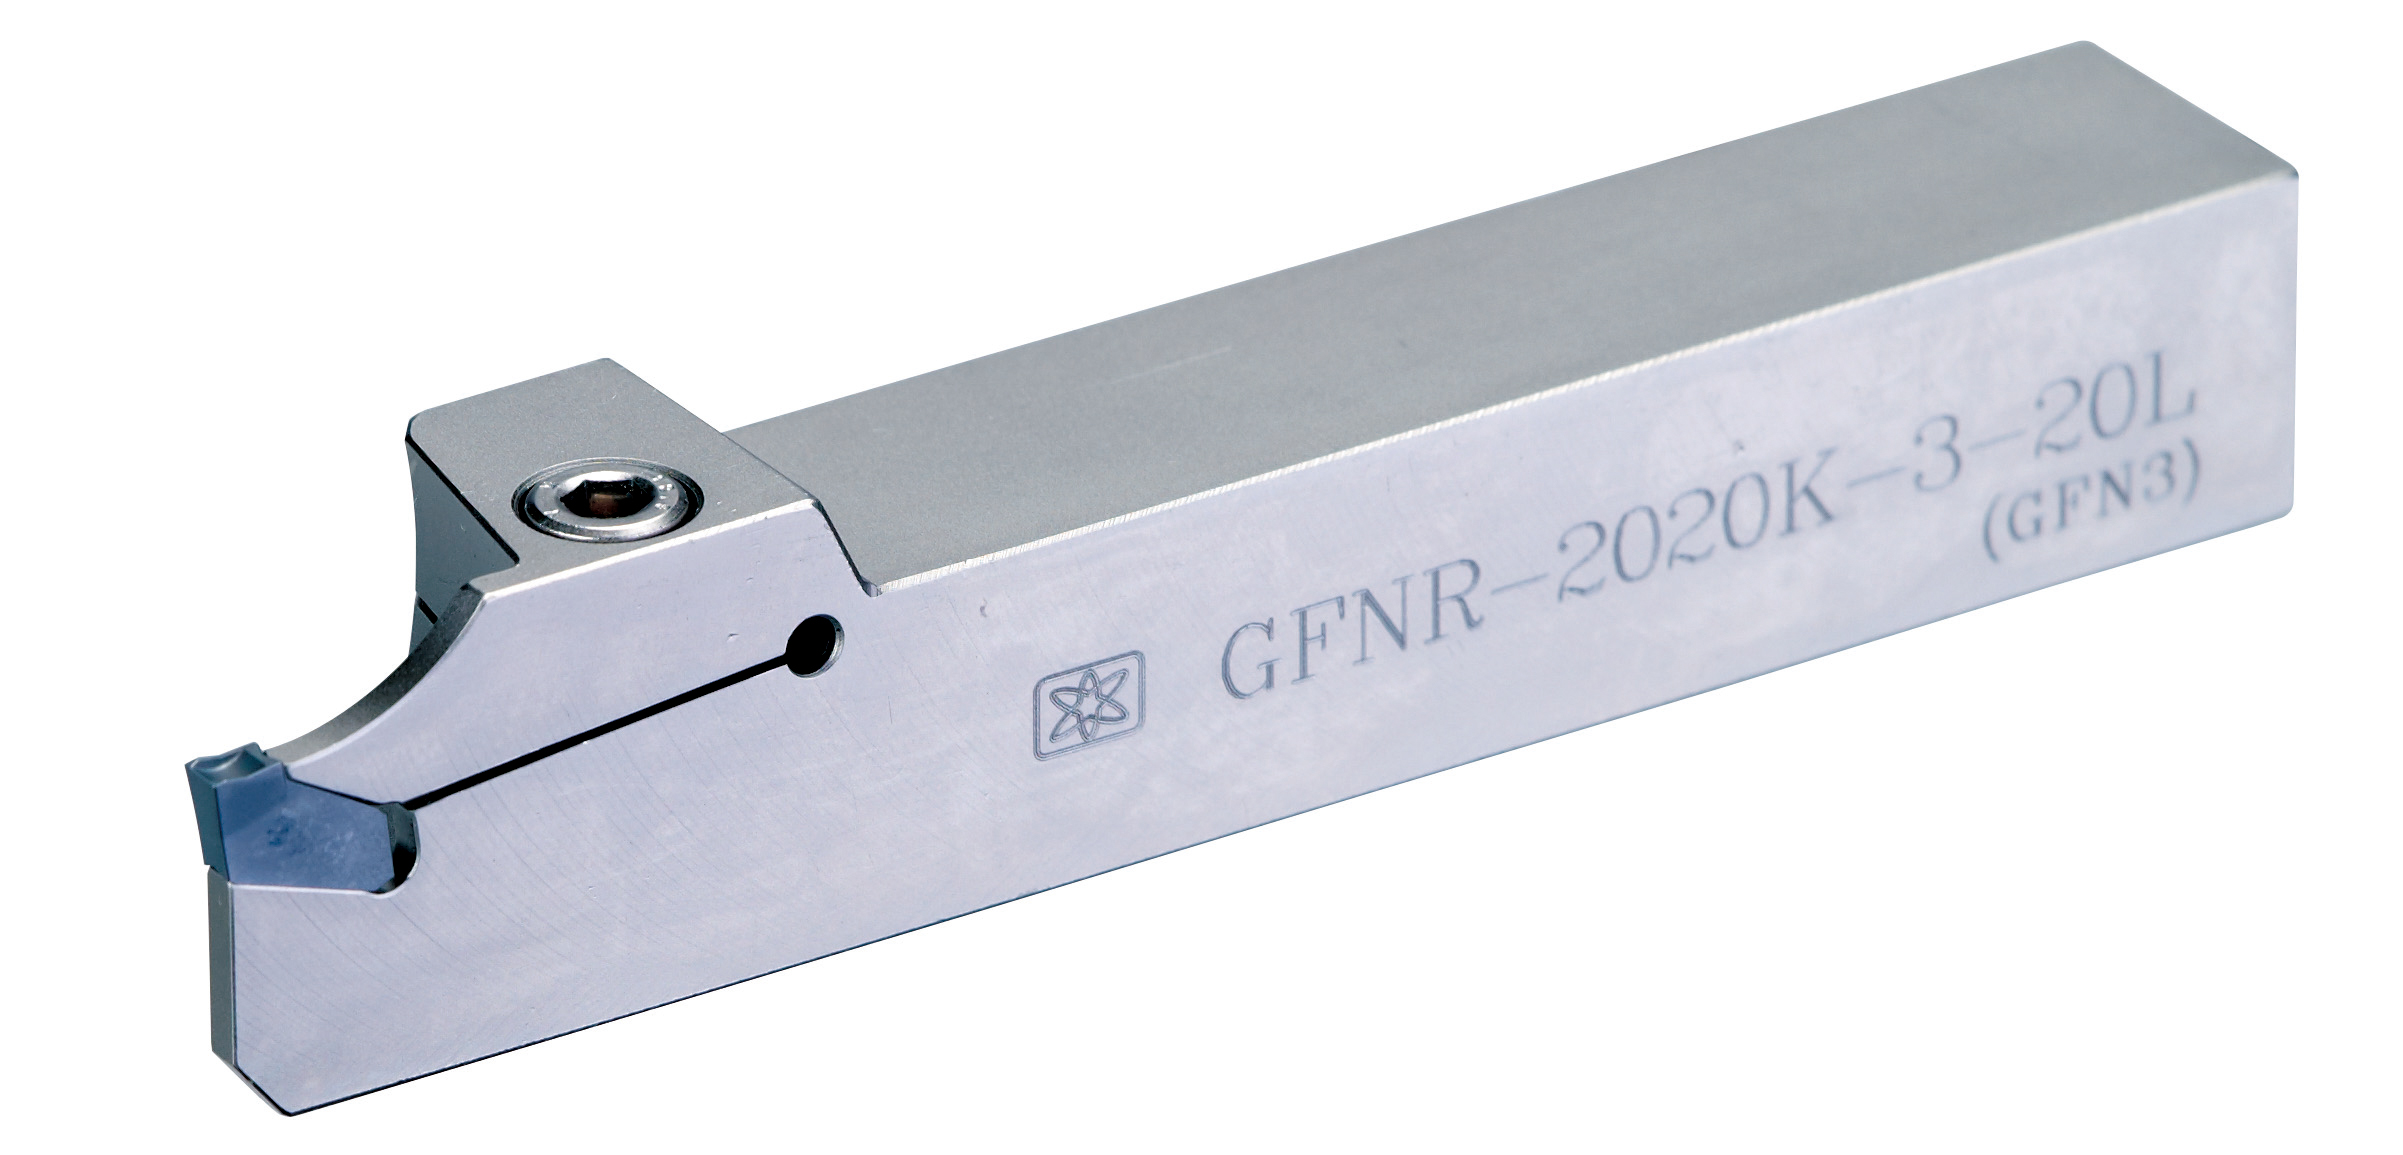 Catalog|GFNR (GFN2 / GFN3) External Grooving Tool Holder